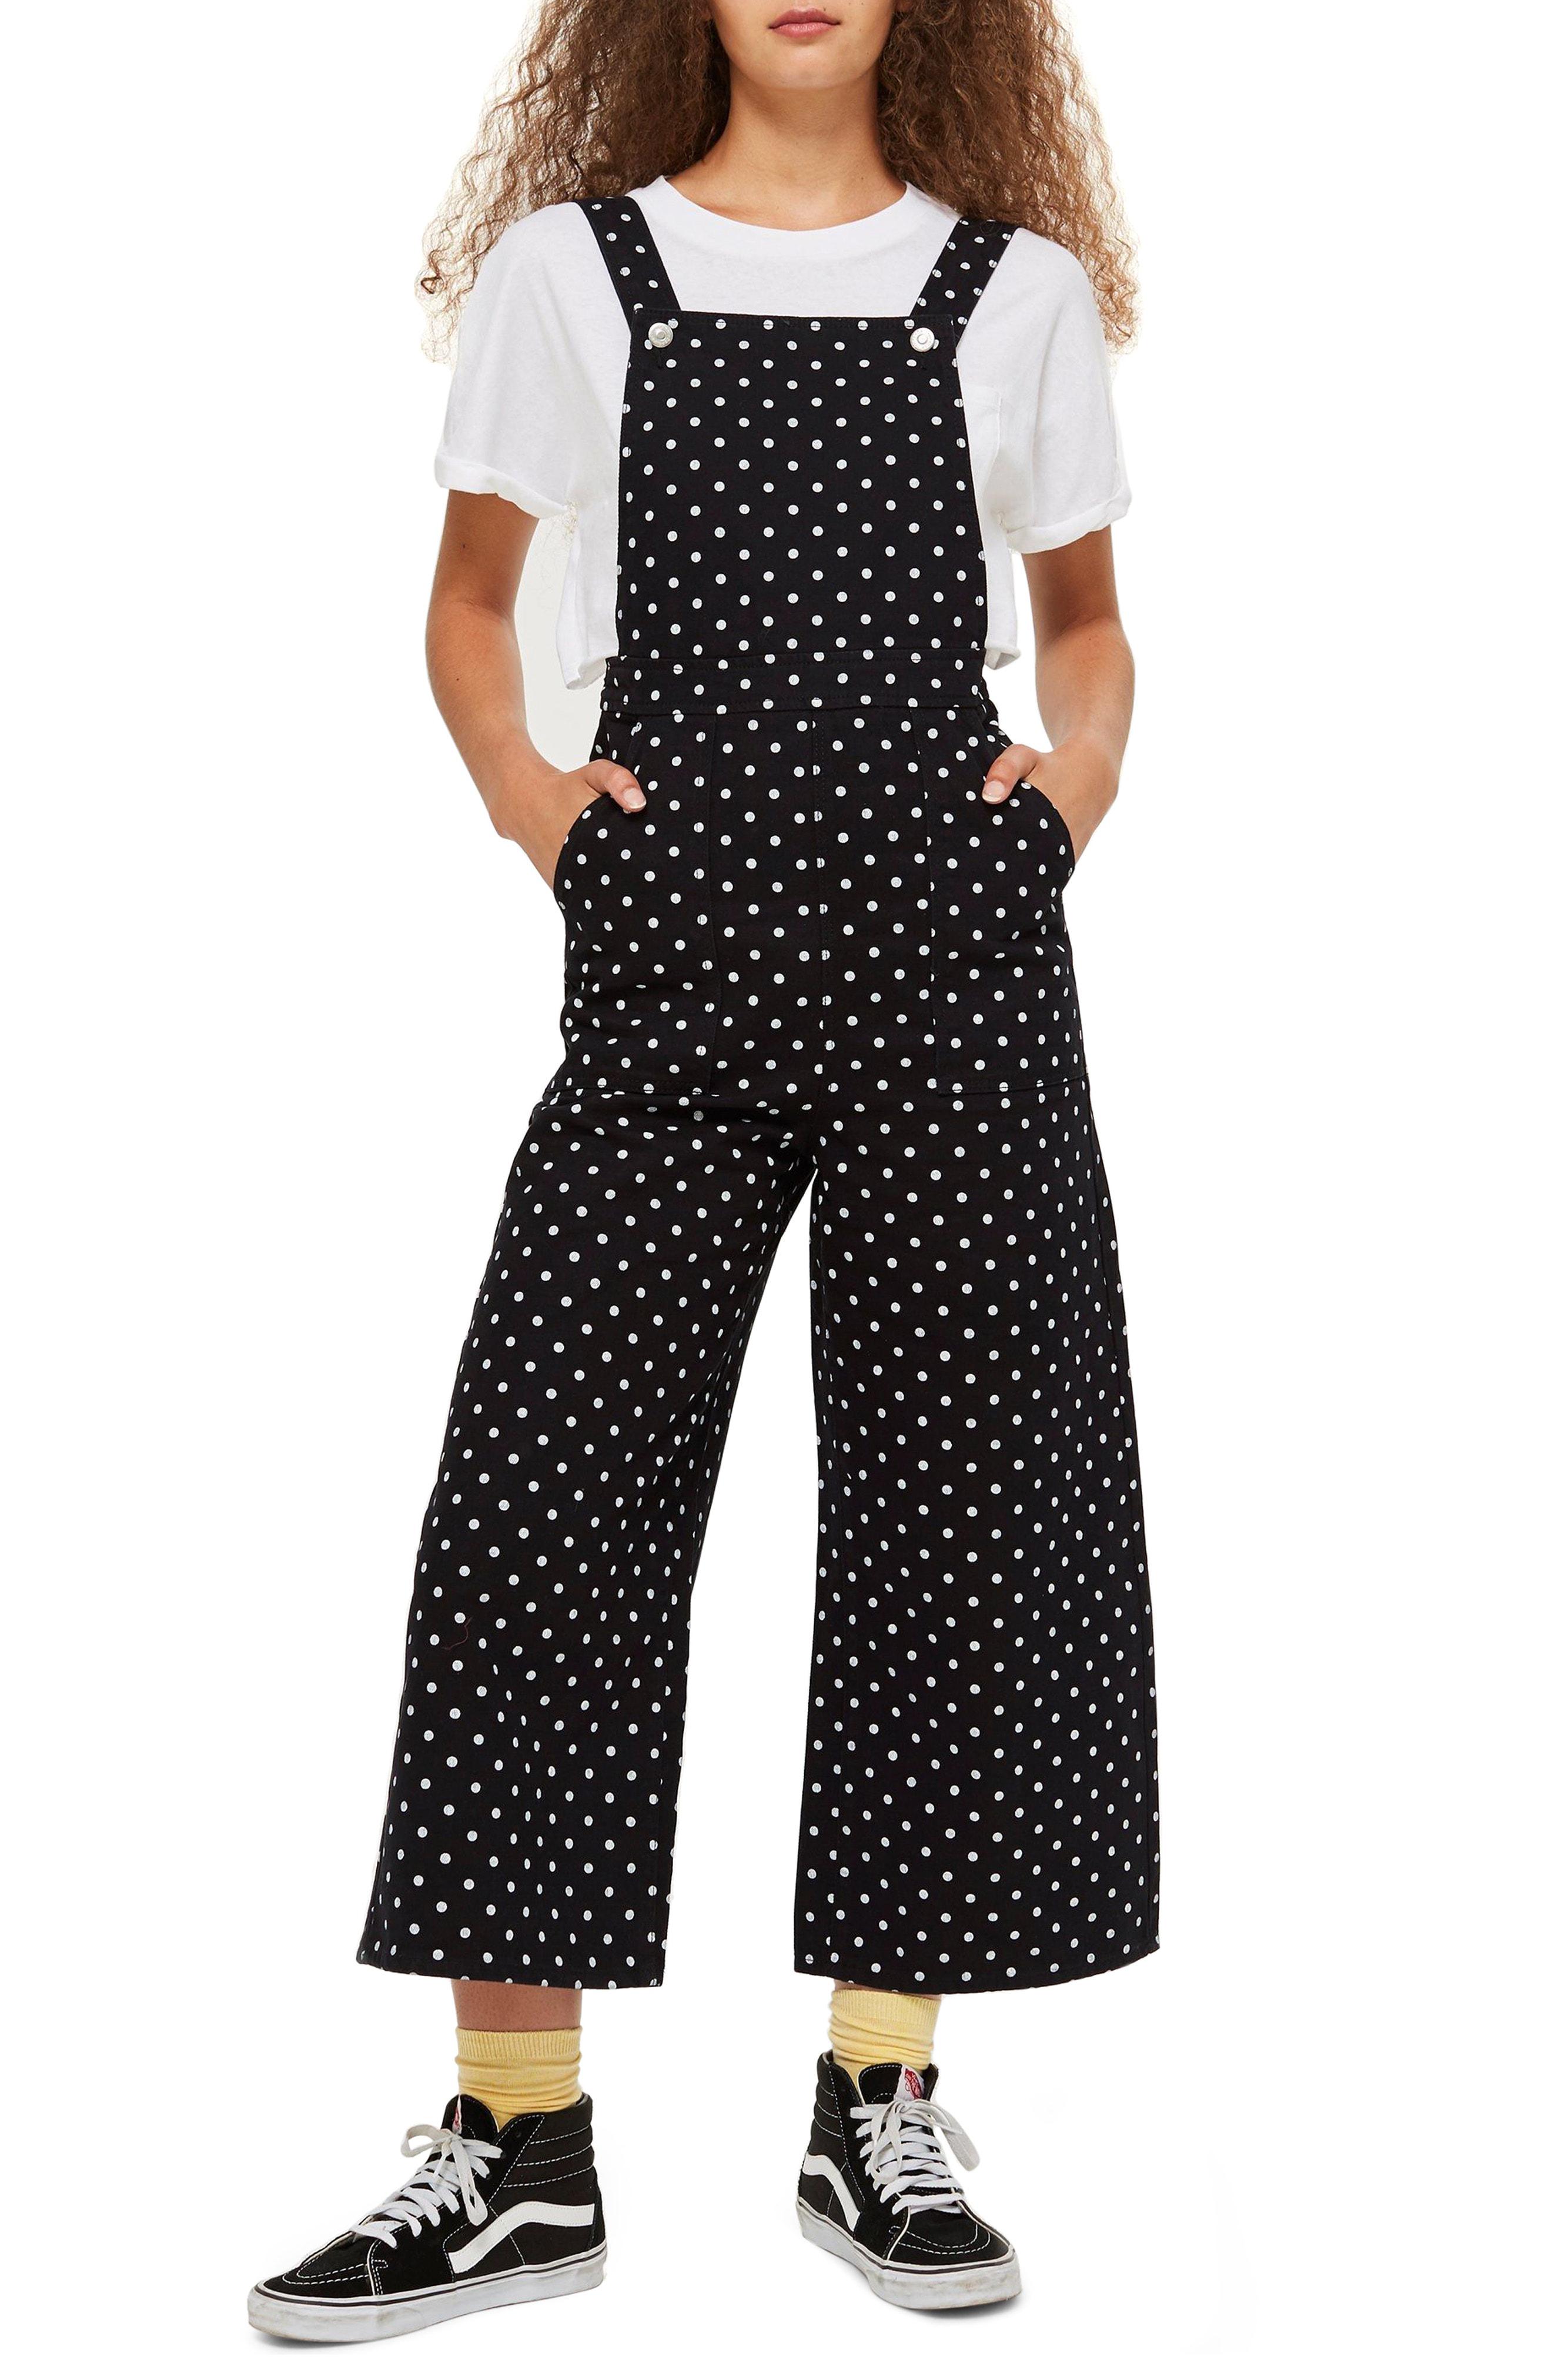 topshop polka dot overalls